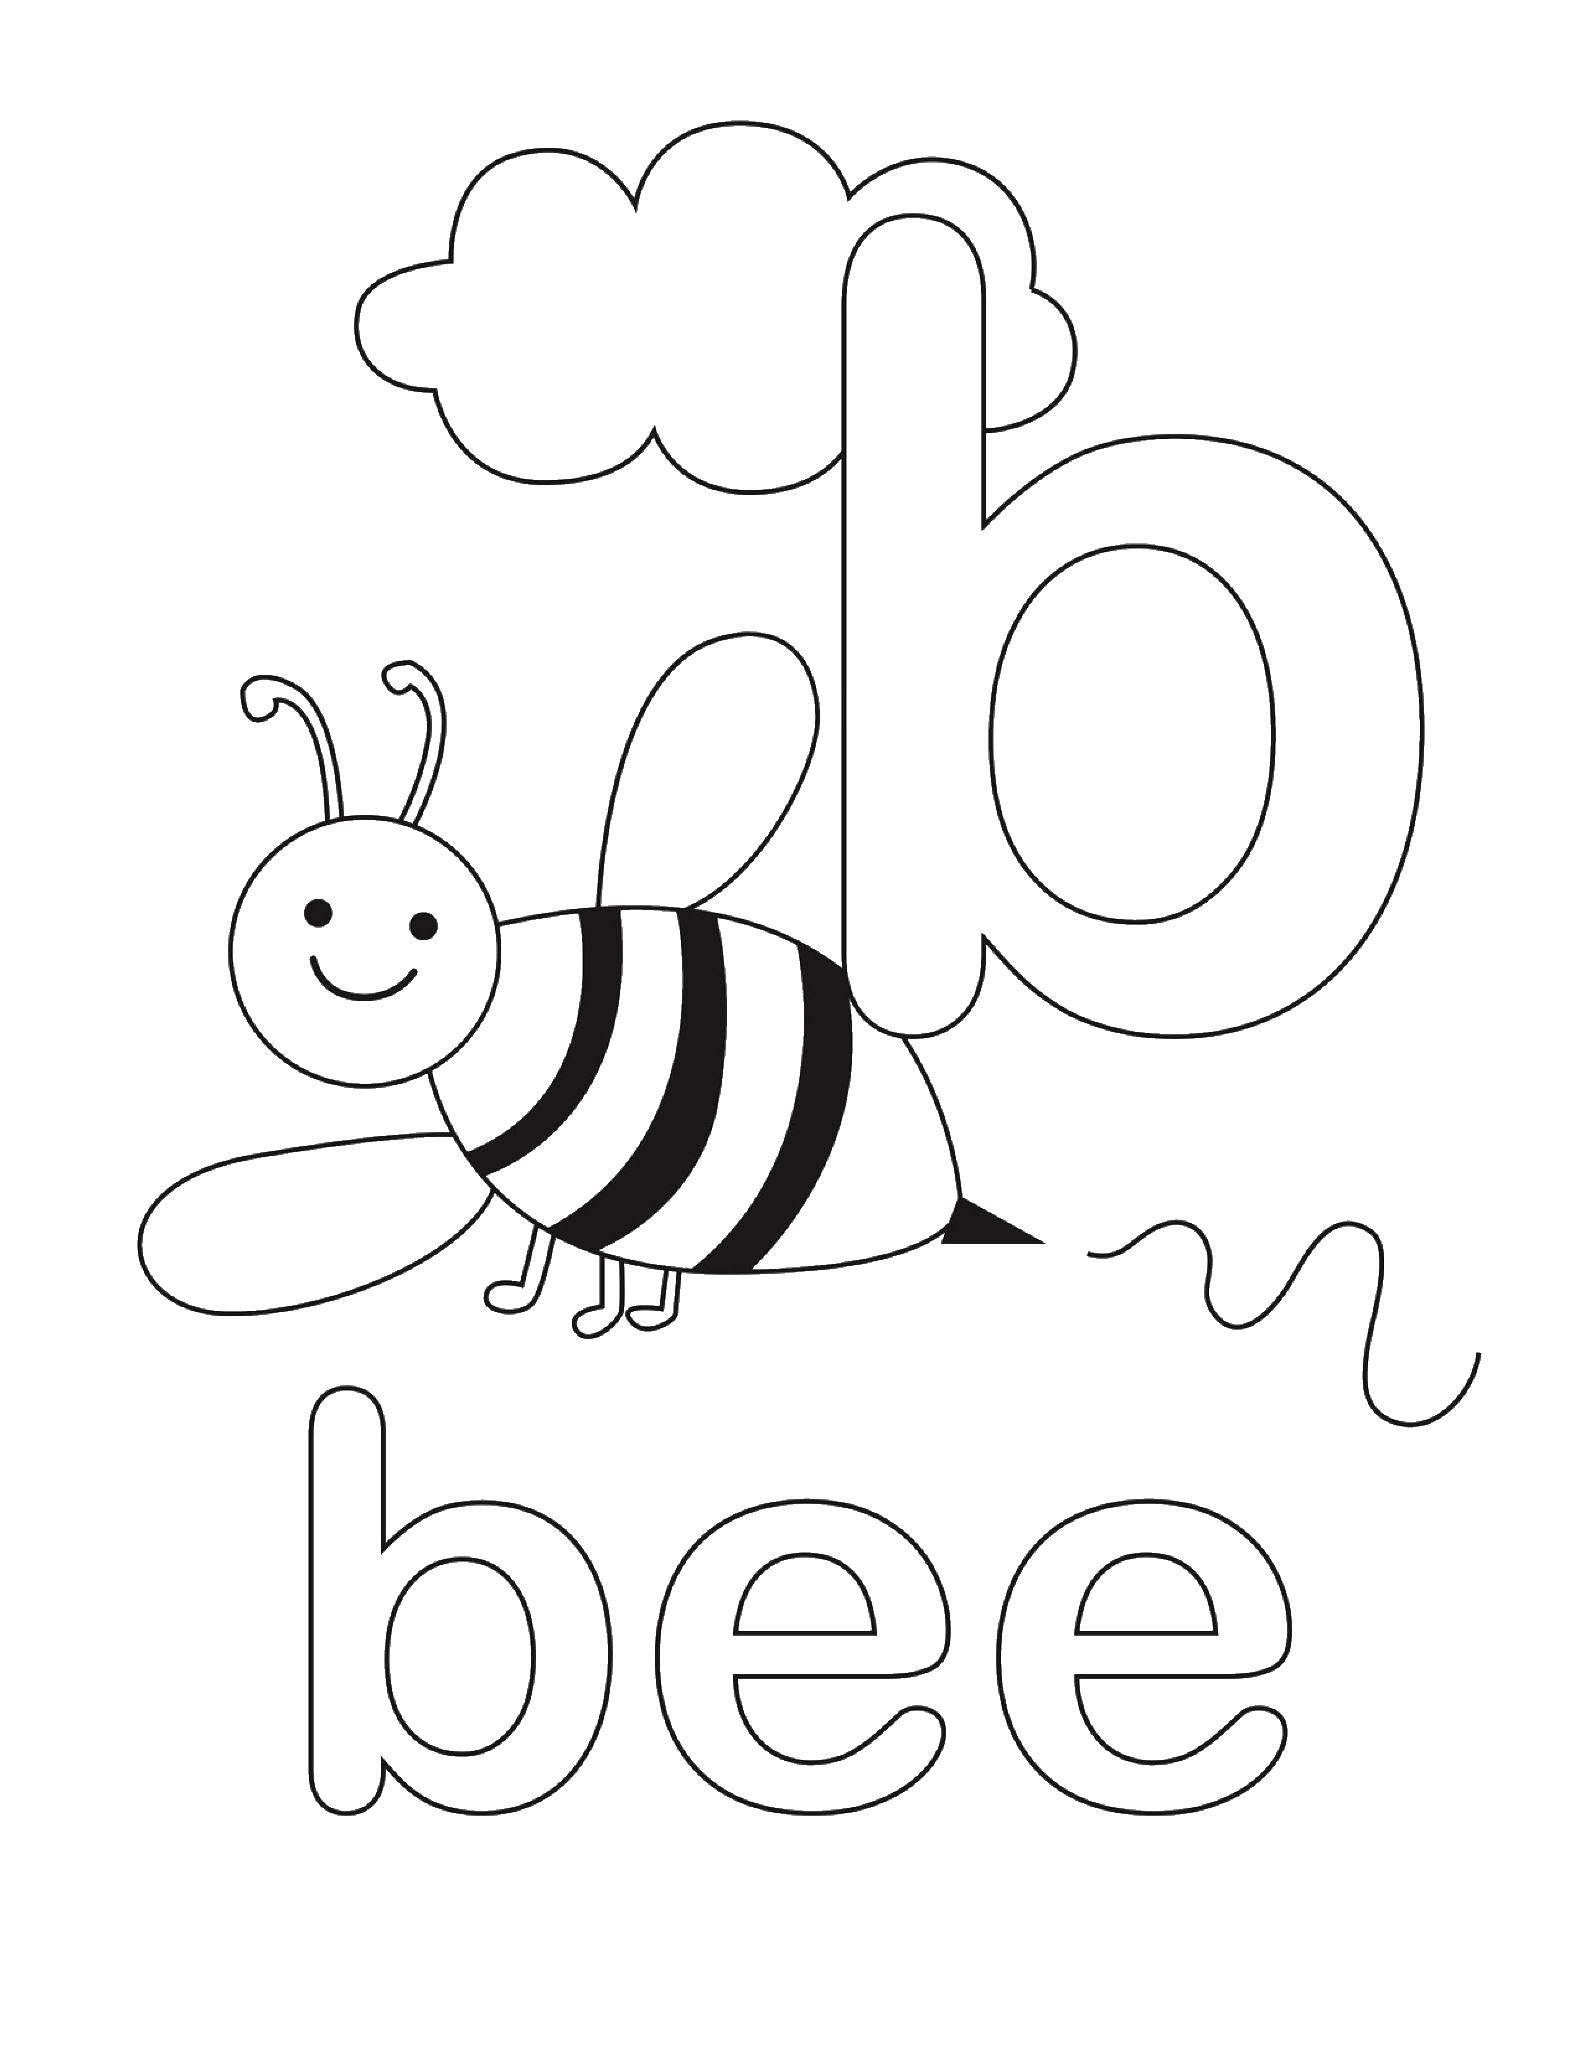 Название: Раскраска Пчела. Категория: английские слова. Теги: английские слова, пчела.